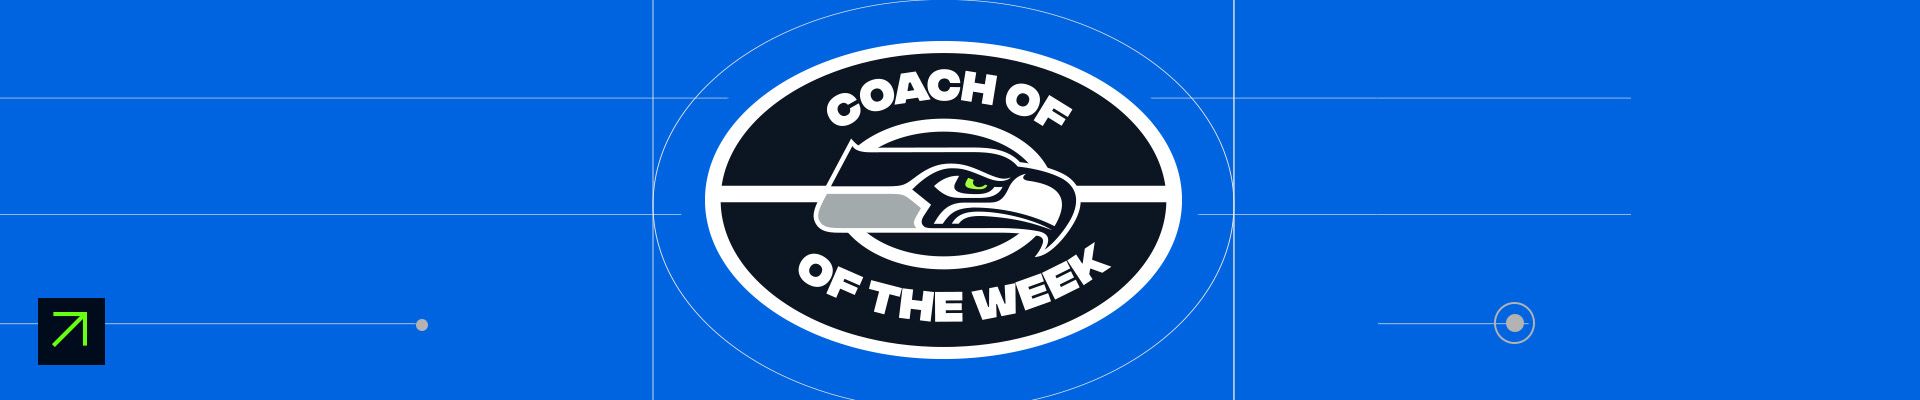 Renton head coach wins Coach of the Week from Seahawks